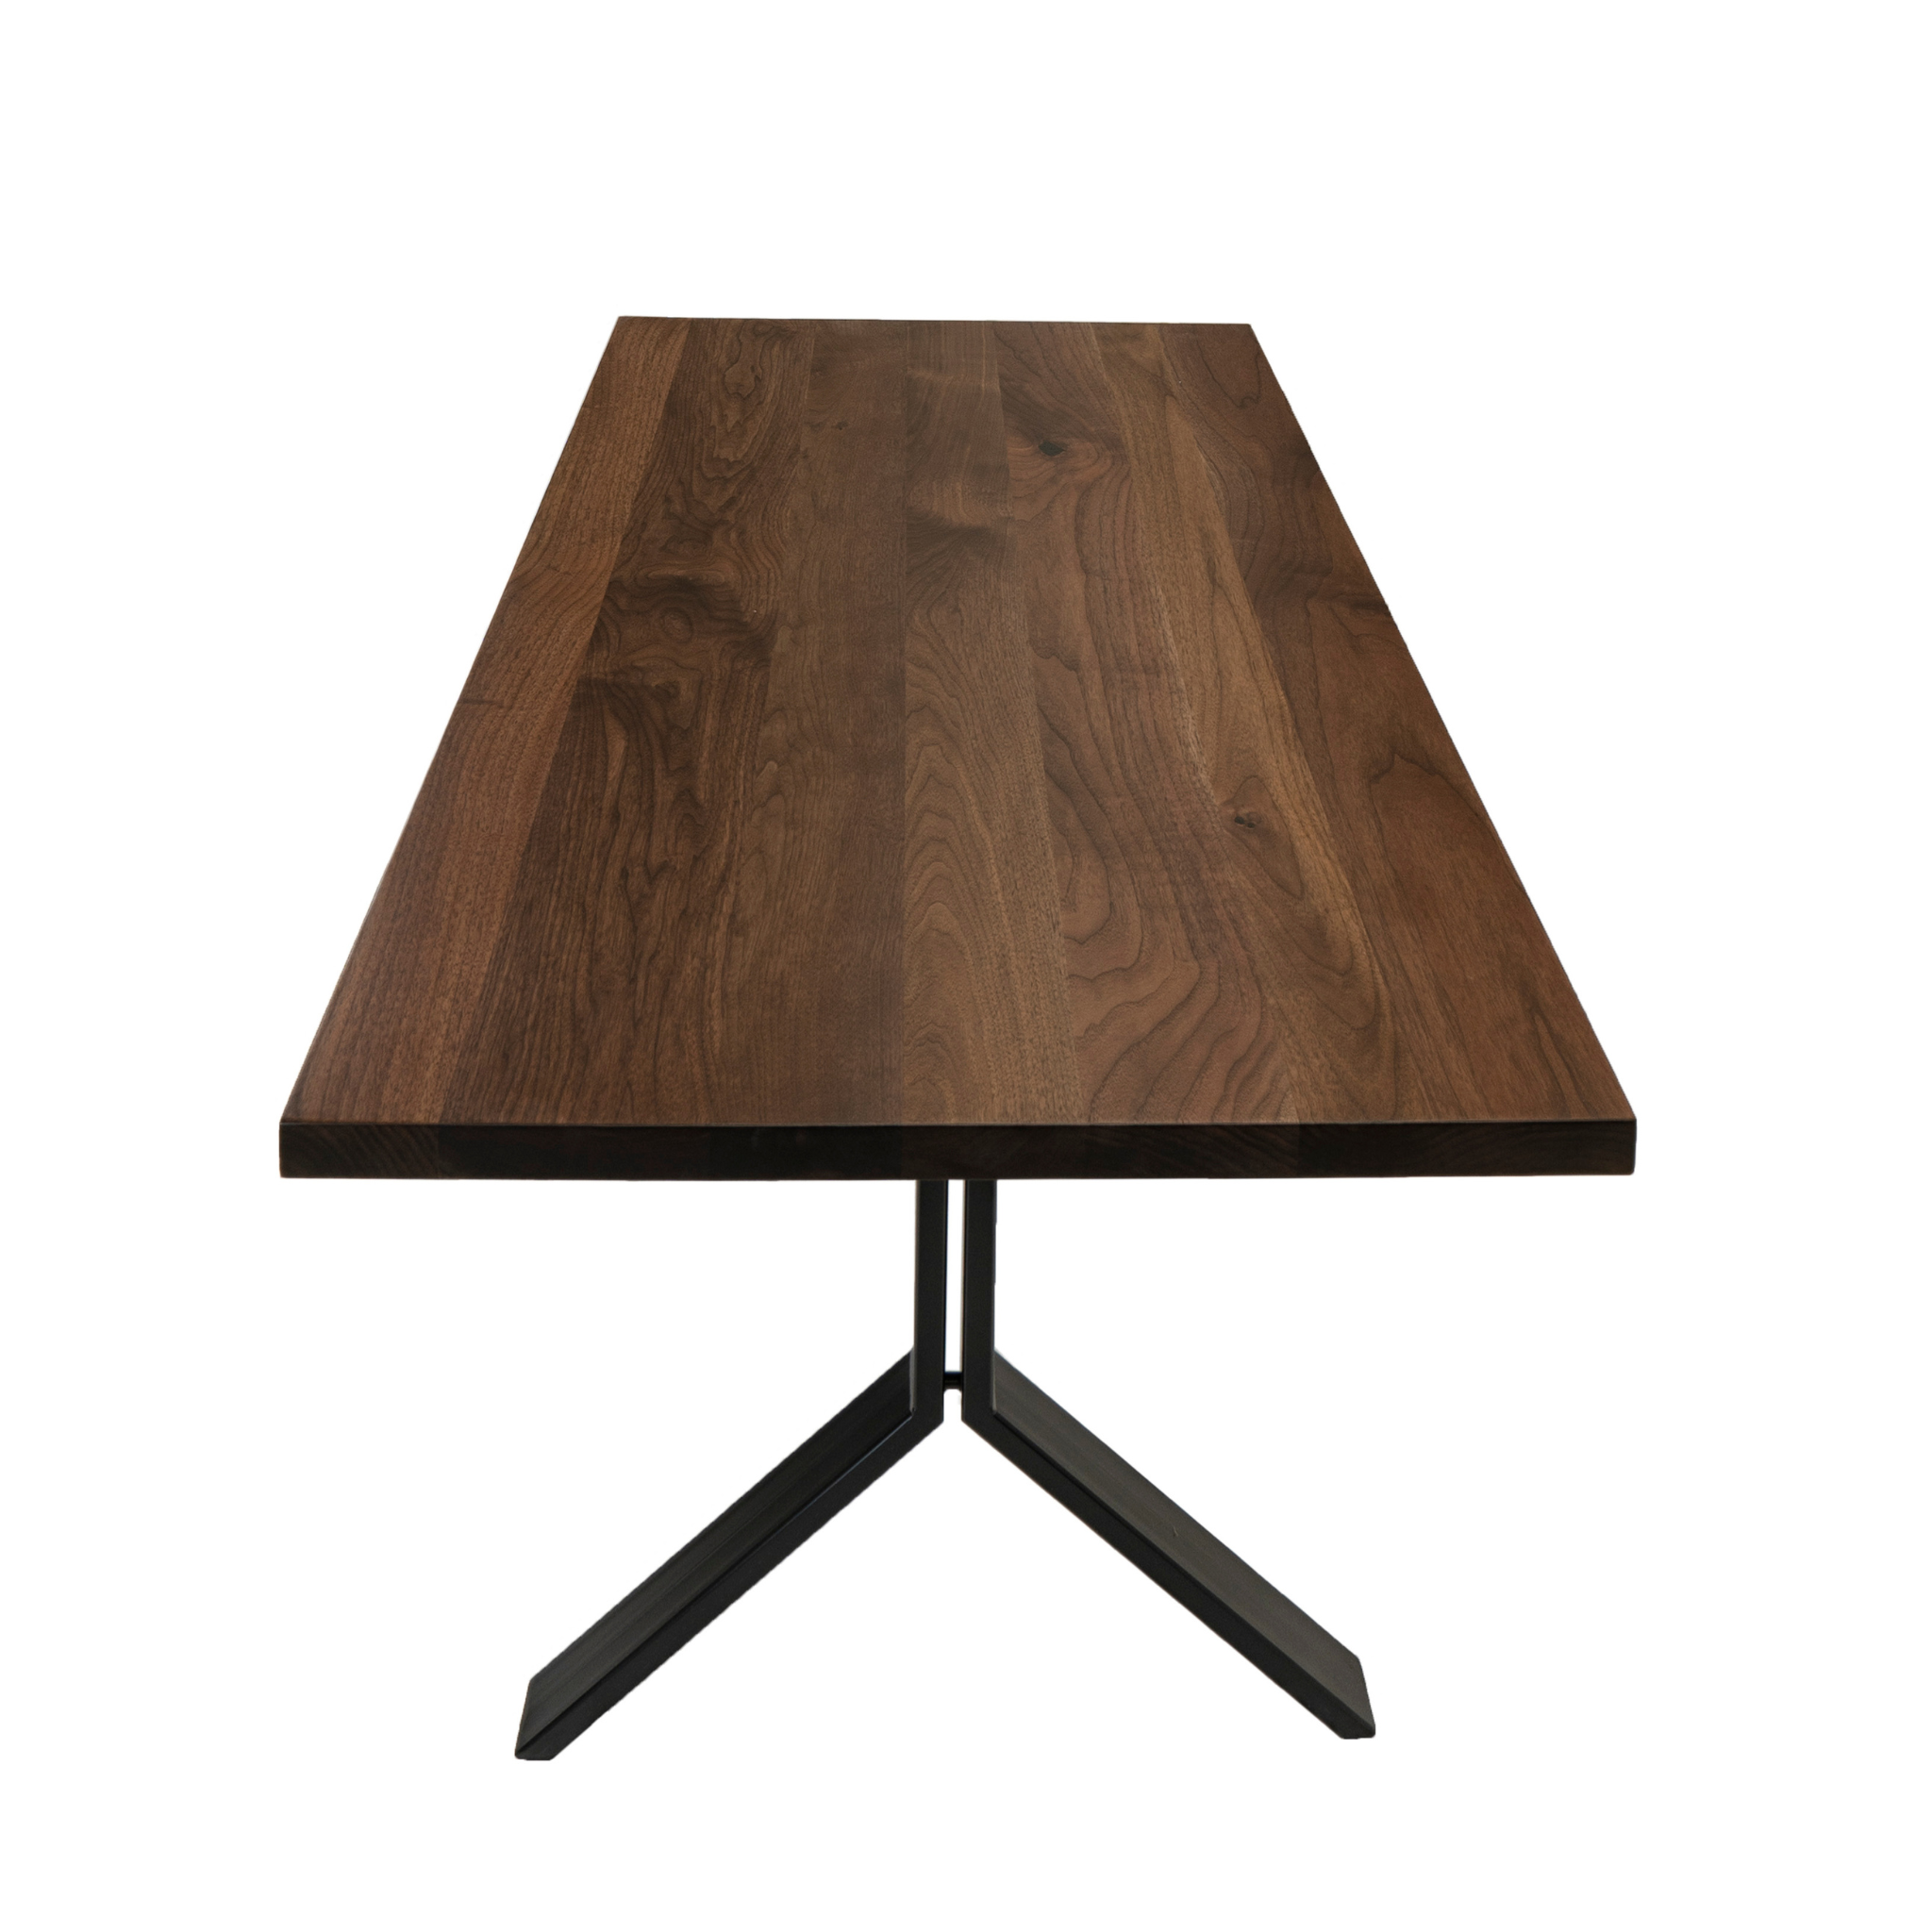 Modern walnut dining table. Created by Urban Industrial Design.